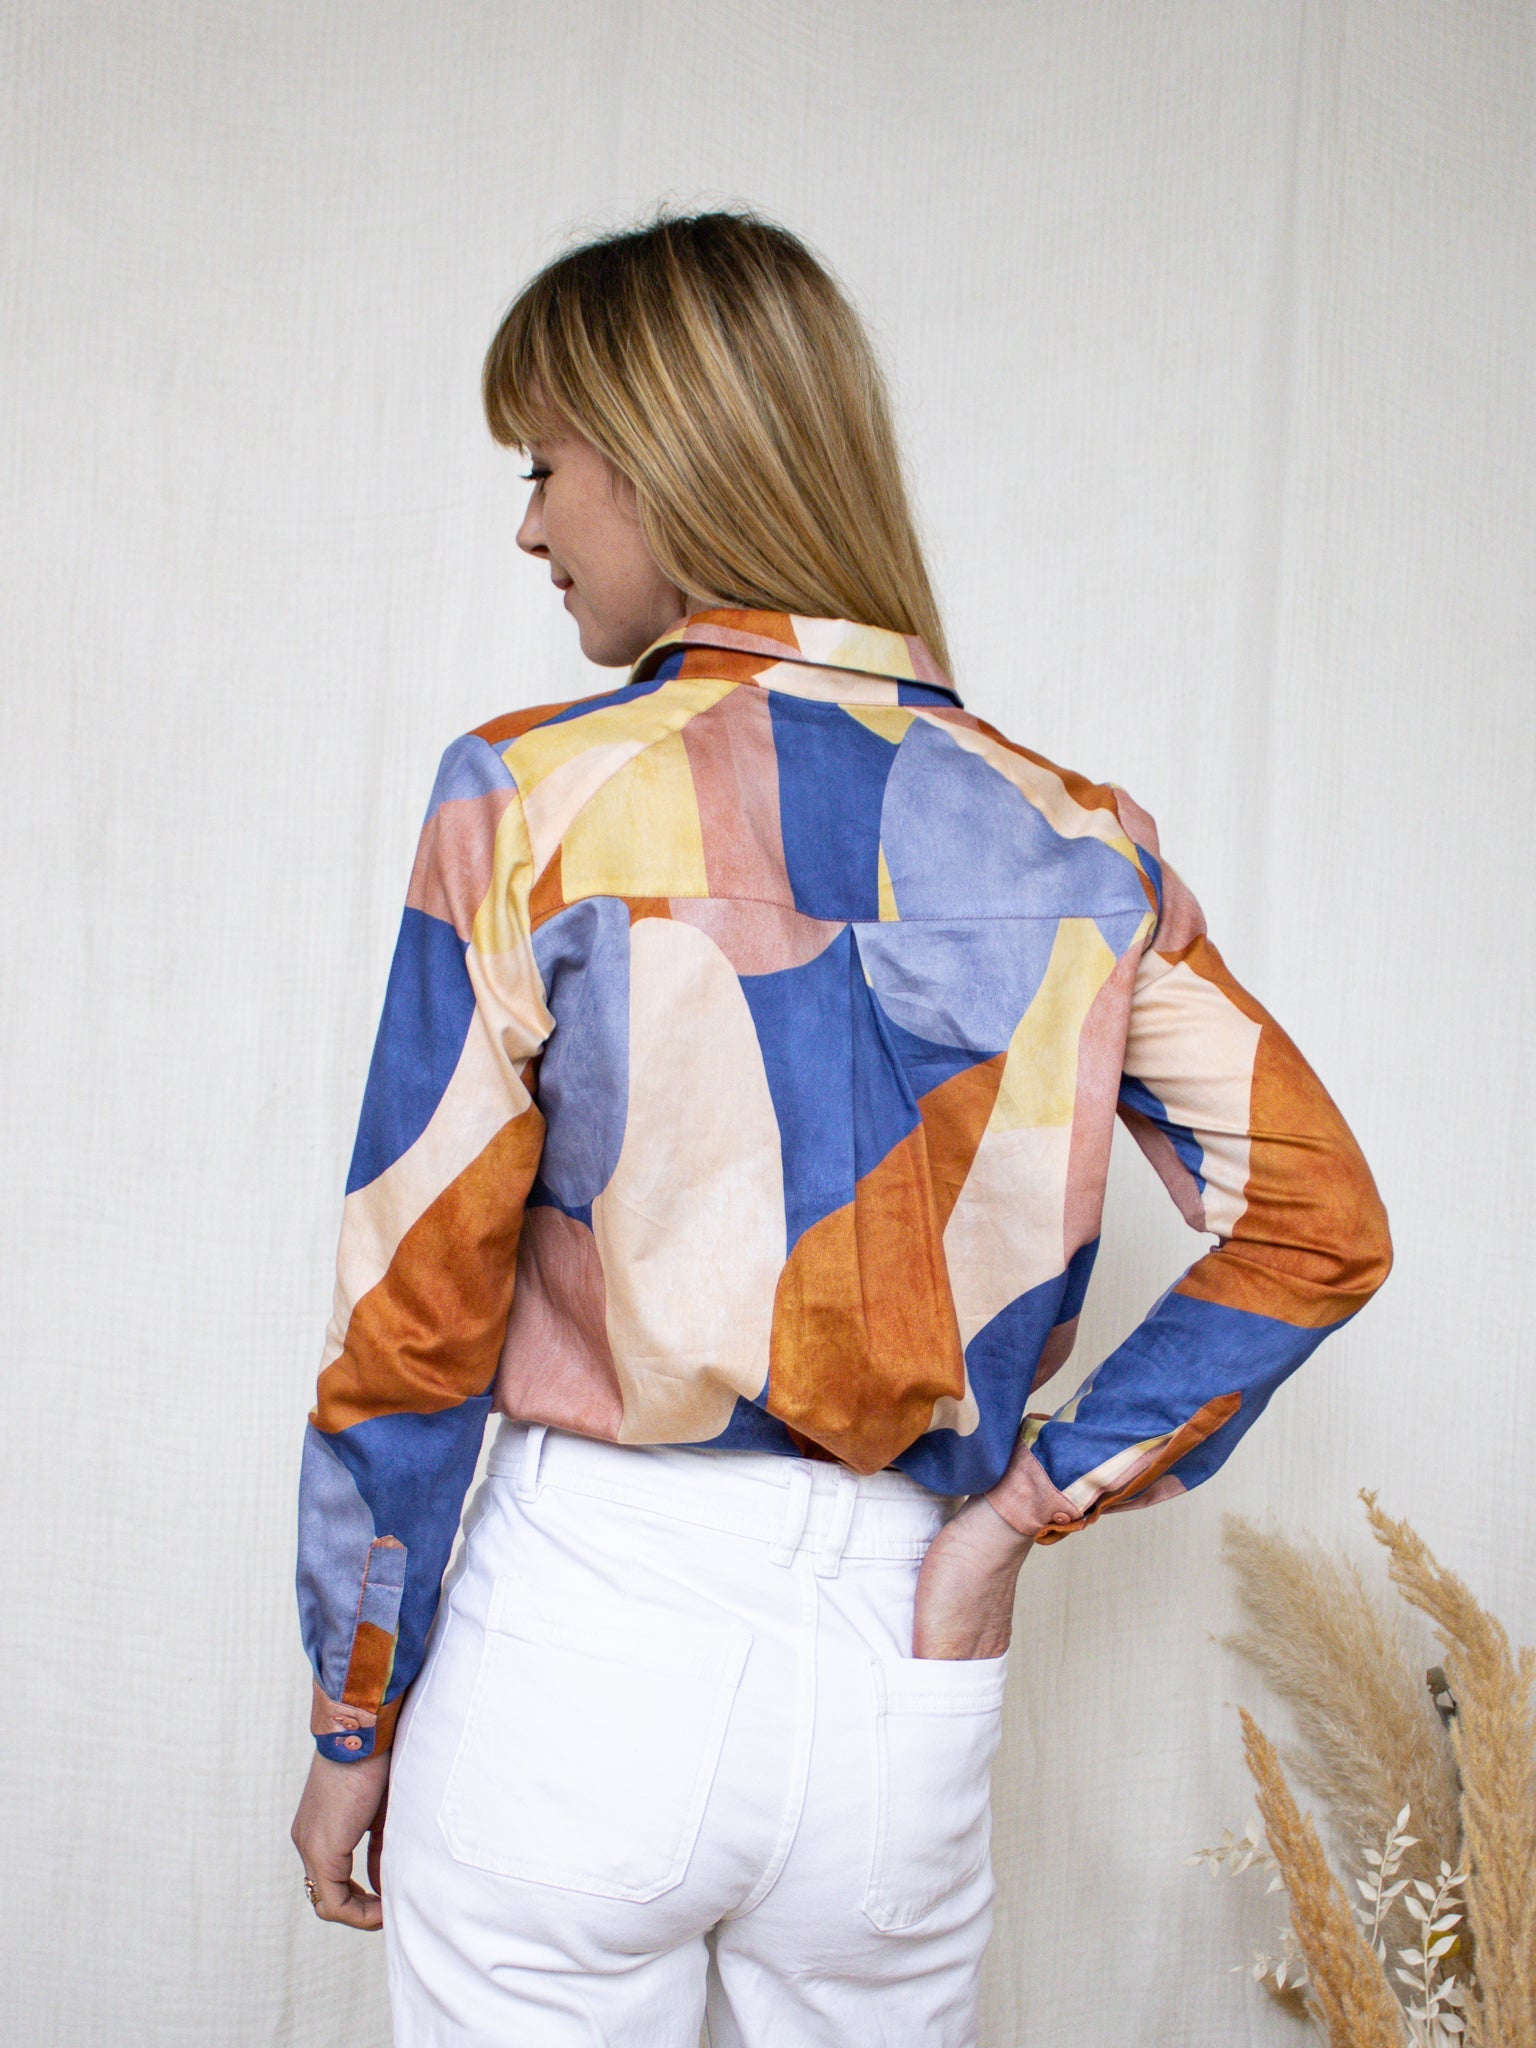 Maya Shirt - pattern Couture PDF or paper - Joli Lab